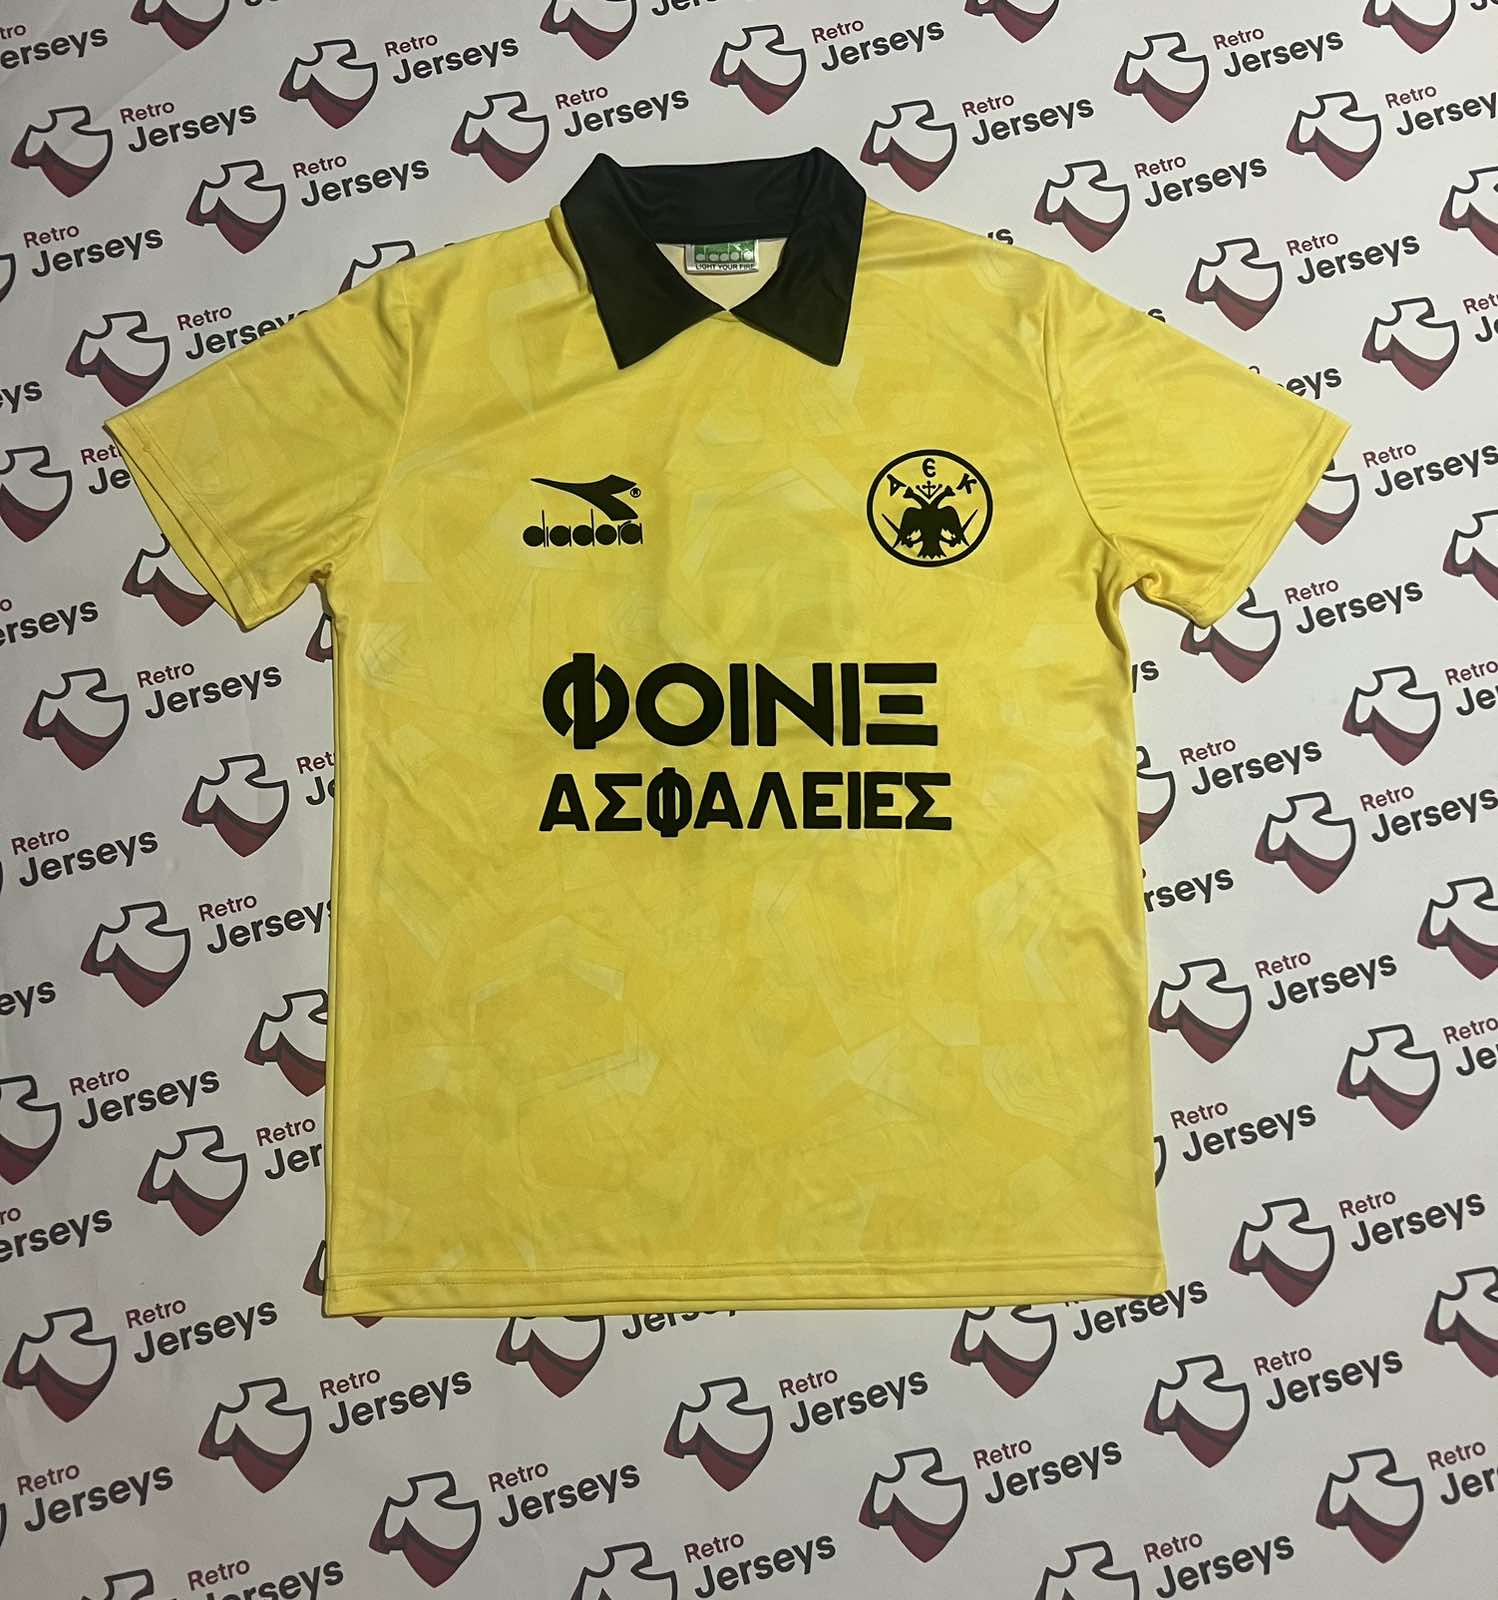 AEK Athens Shirt 1992-1993 Home - Retro Jersey, φανέλα αεκ - Retro Jerseys